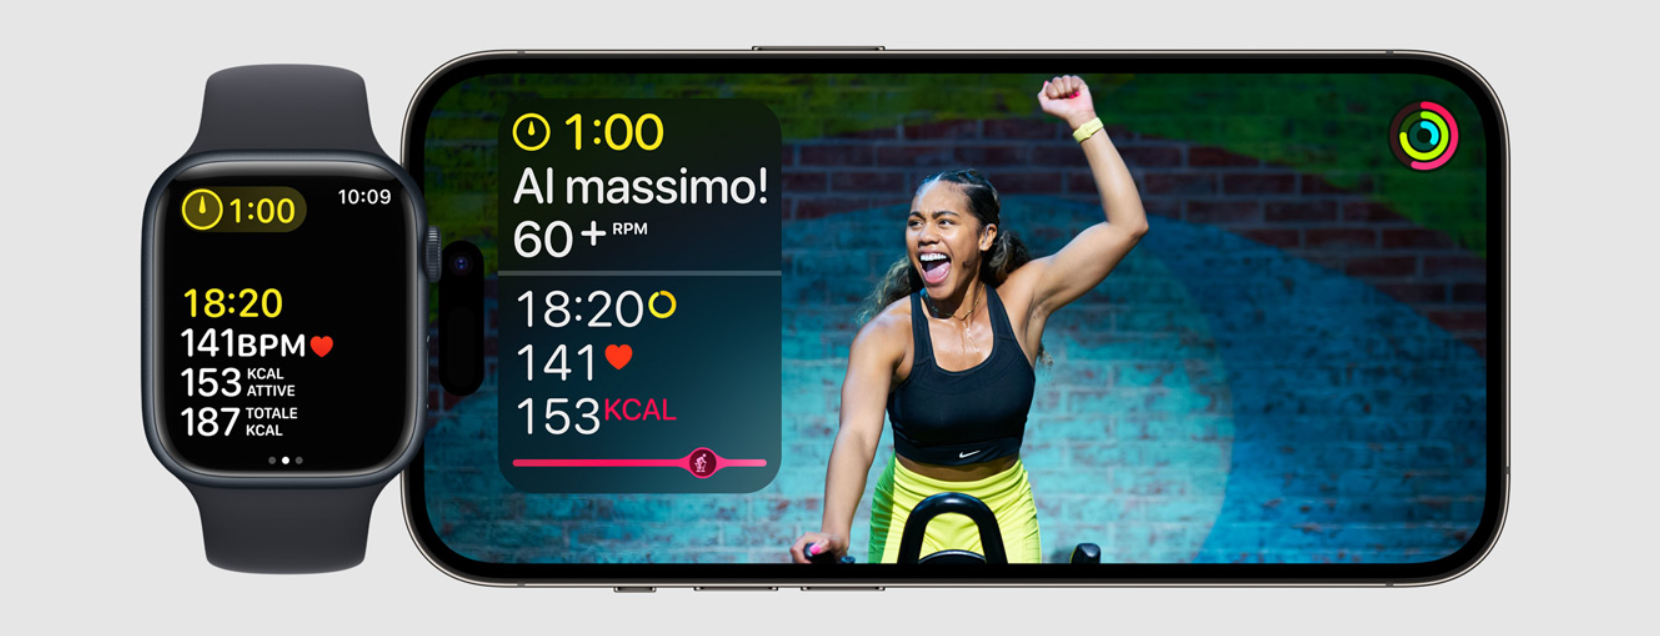 Apple Fitness+ iPhone Apple Watch